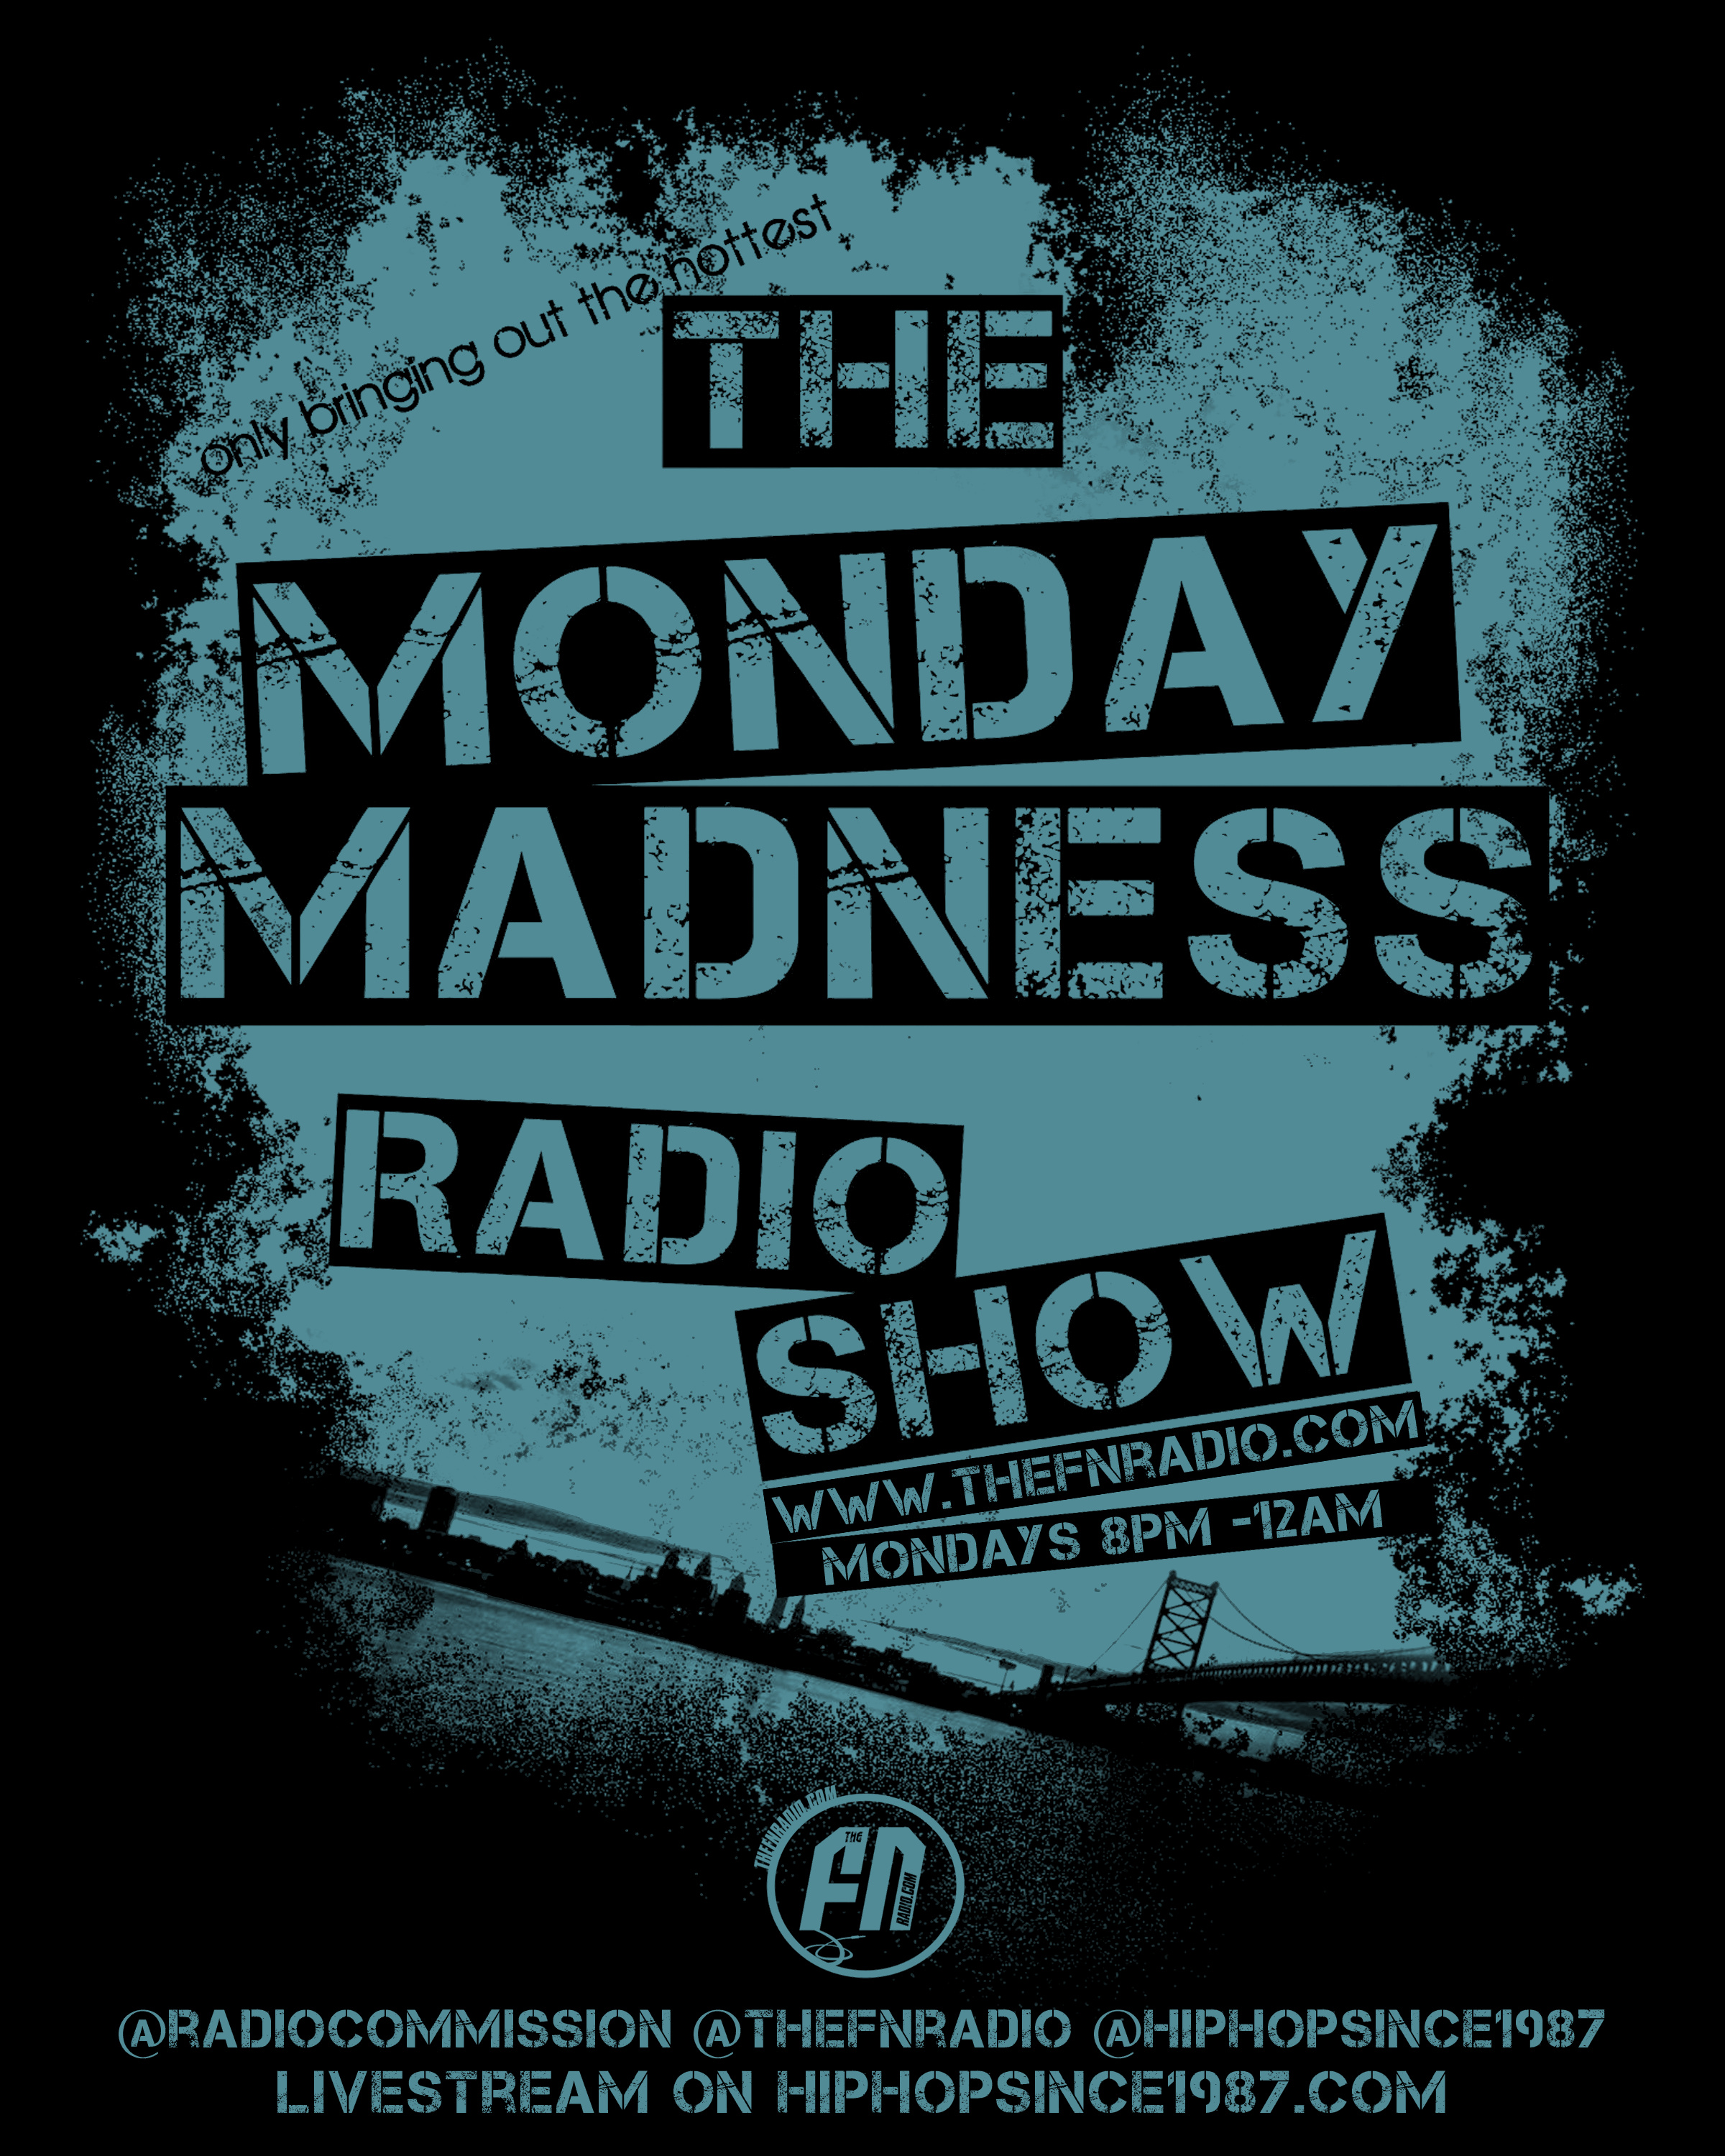 MondayMadnessk Tonight @Monmadnessradio ft @Tonetrump @Murdermookez @Arab_tgop Live 8p-12am Hiphopsince1987.Com 